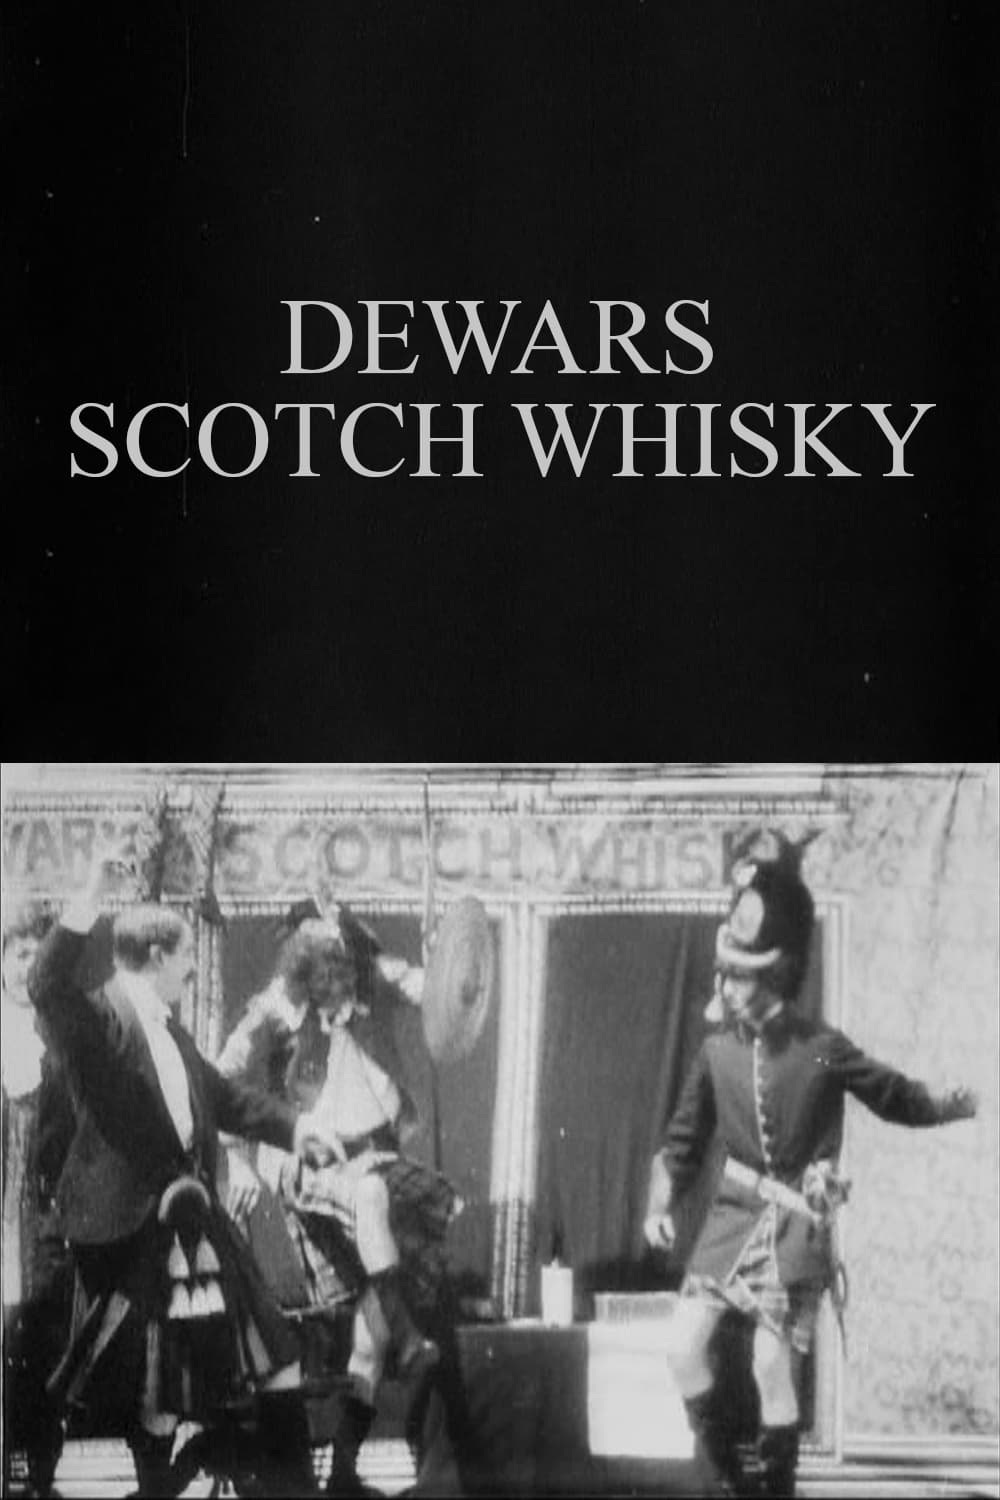 Dewars Scotch Whisky